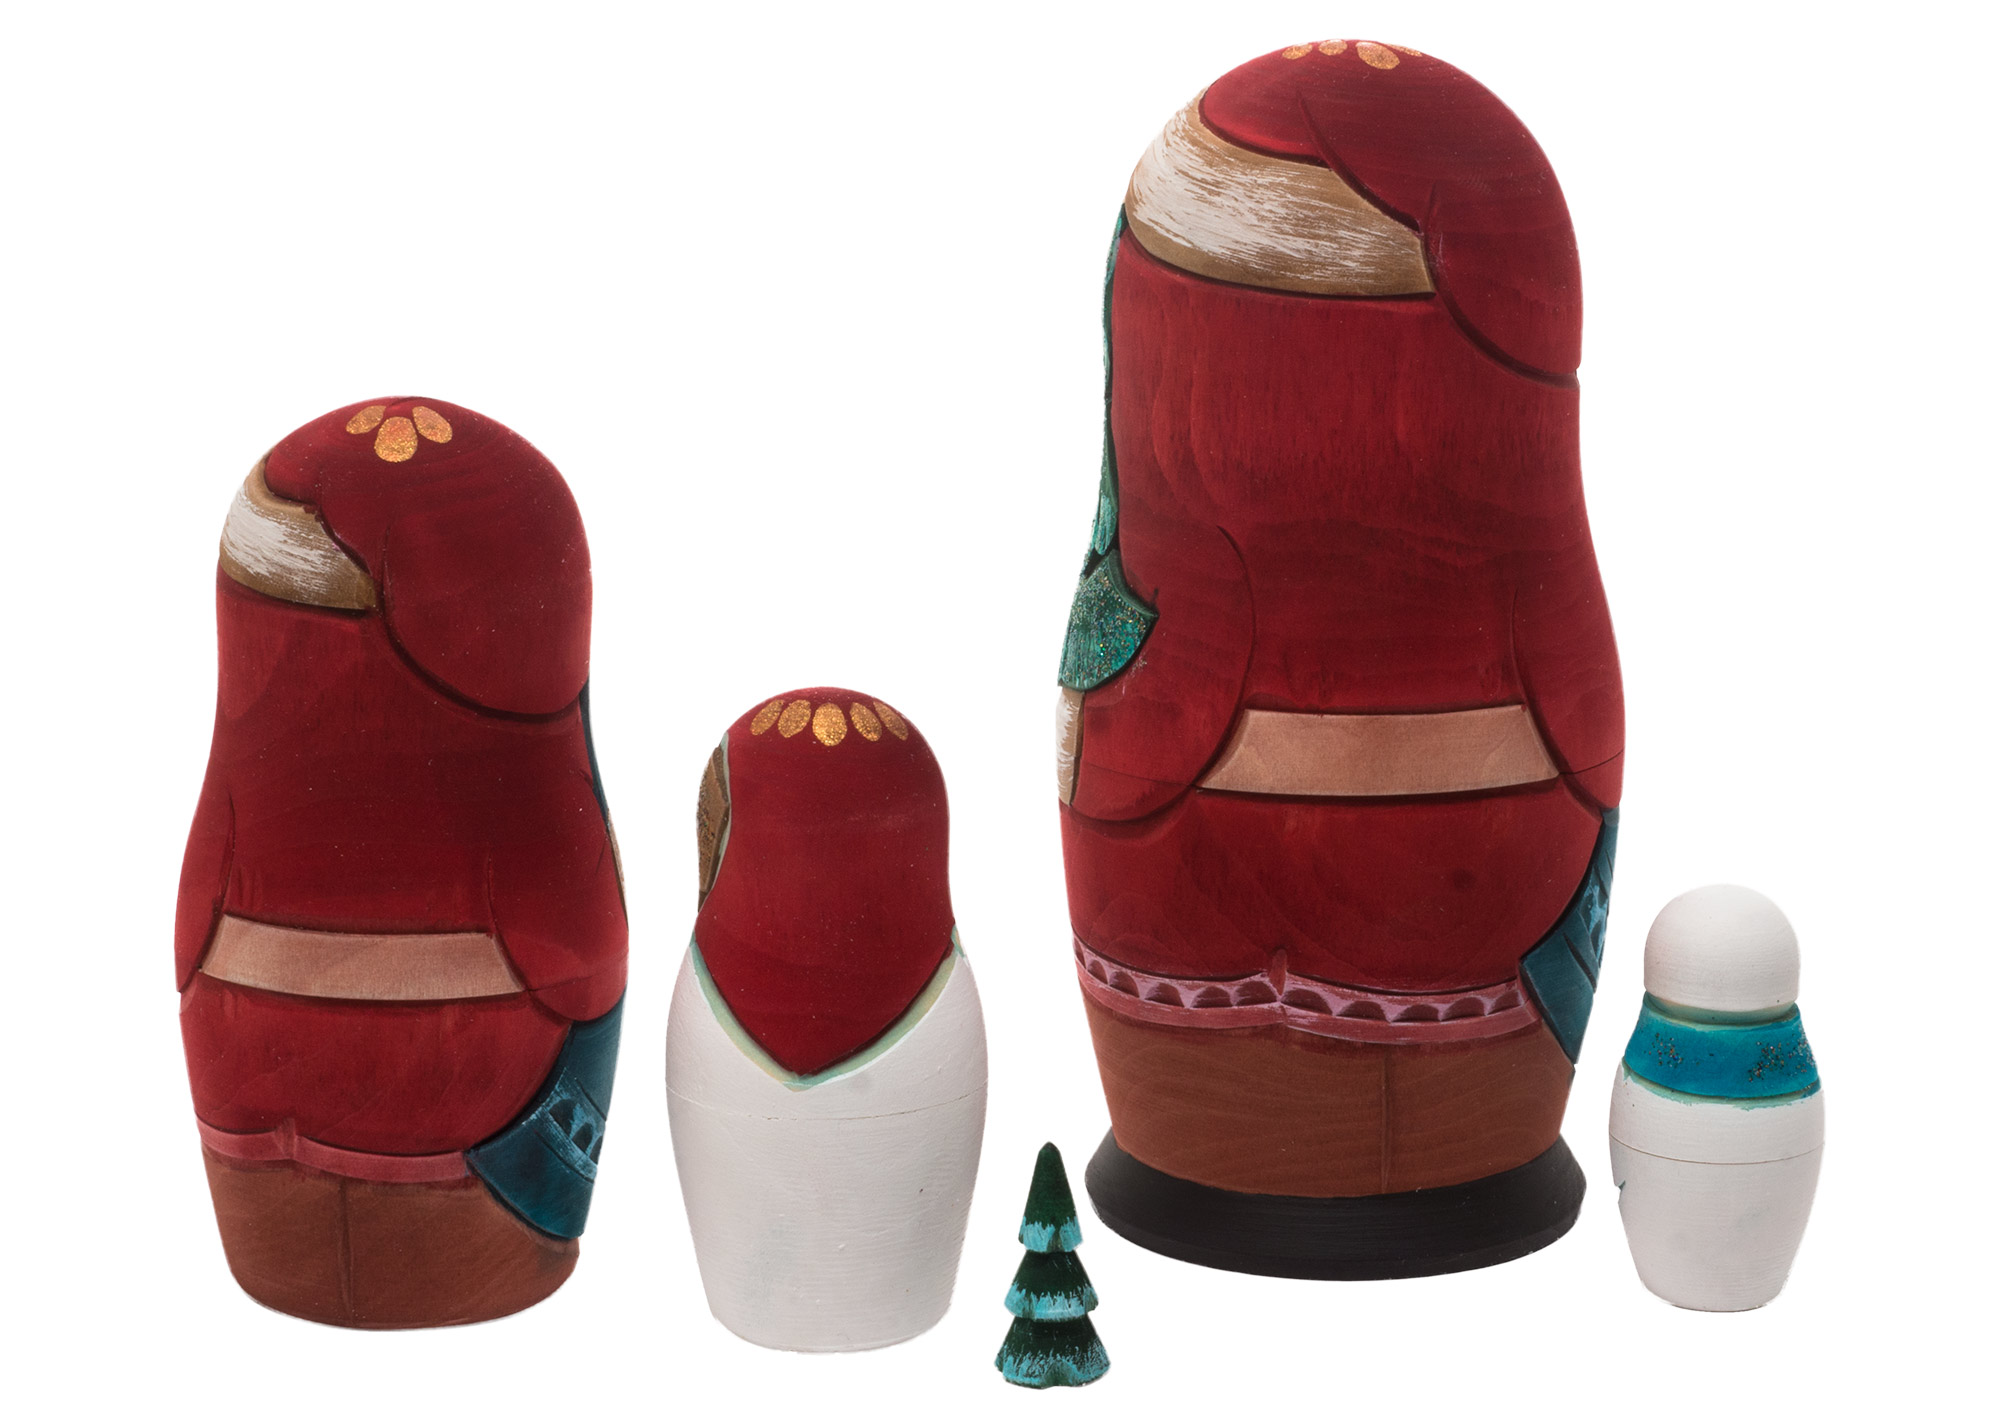 Buy Carved Christmas Nesting Doll 5pc./6" at GoldenCockerel.com